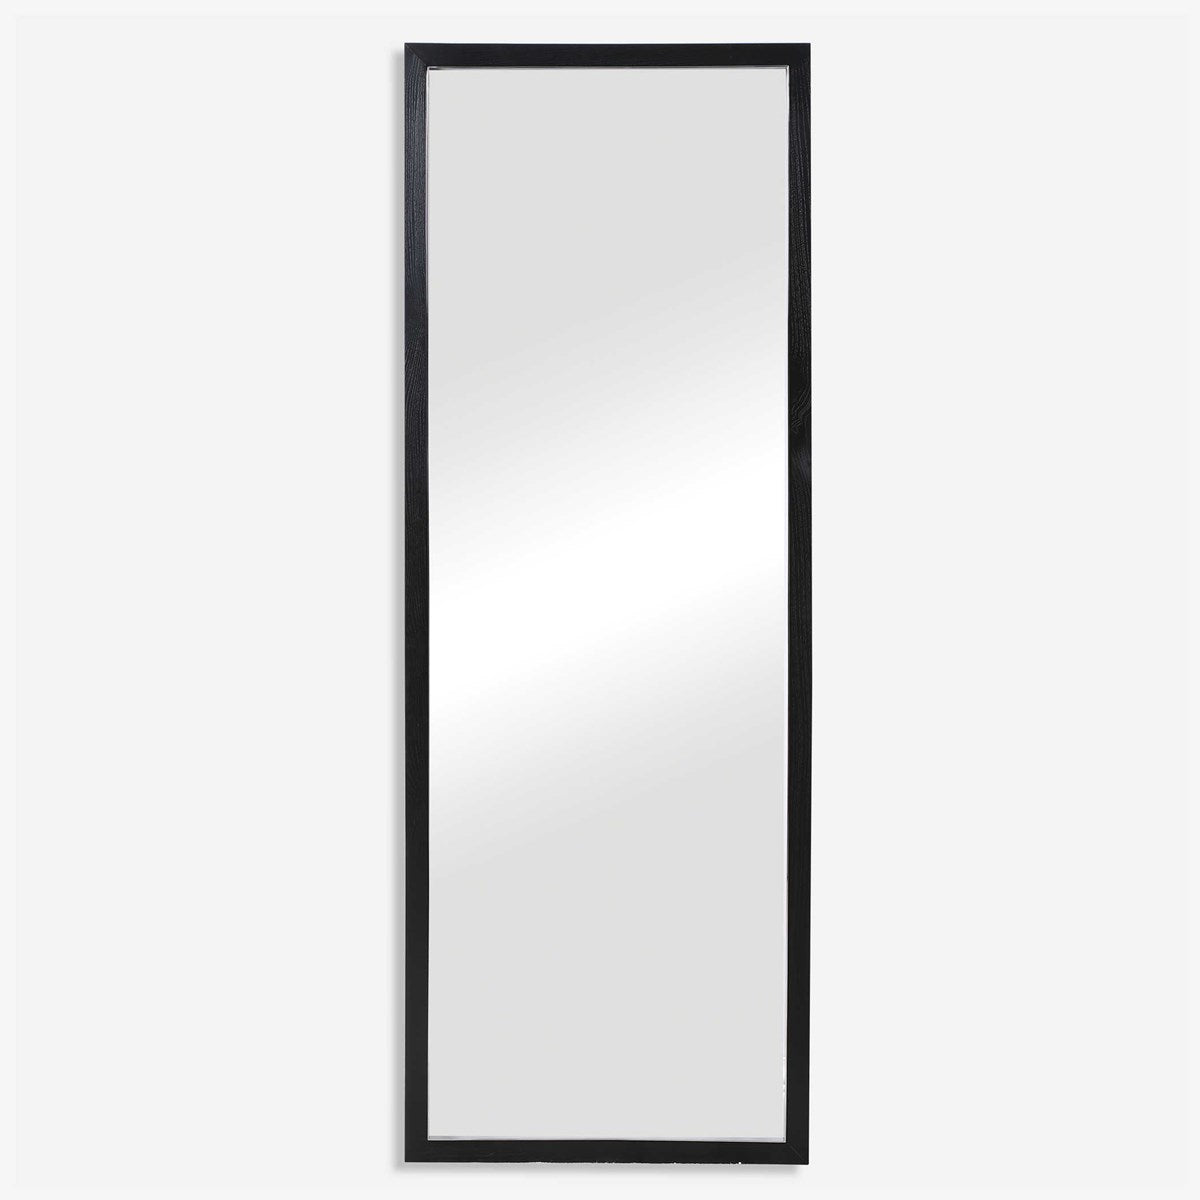 Avri Oversized Dark Wood Mirror-Uttermost-UTTM-09608-Mirrors-1-France and Son